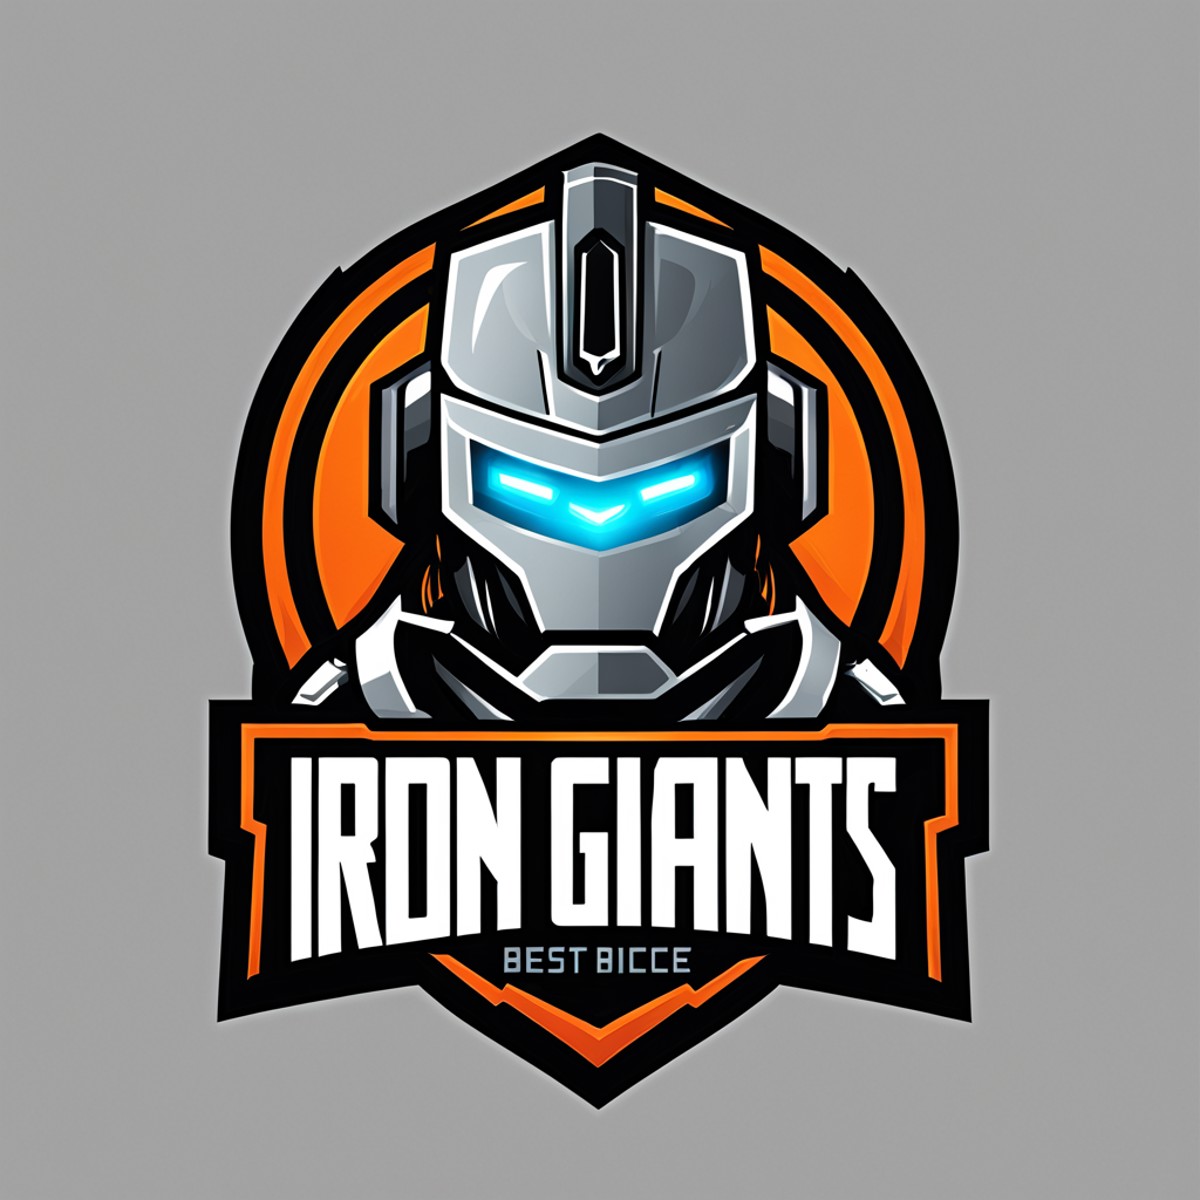 logomkrdsxl, logo for e-sports team, robot ,  vector, text "Iron Giants",  <lora:logomkrdsxl:1>, best quality, masterpiece,